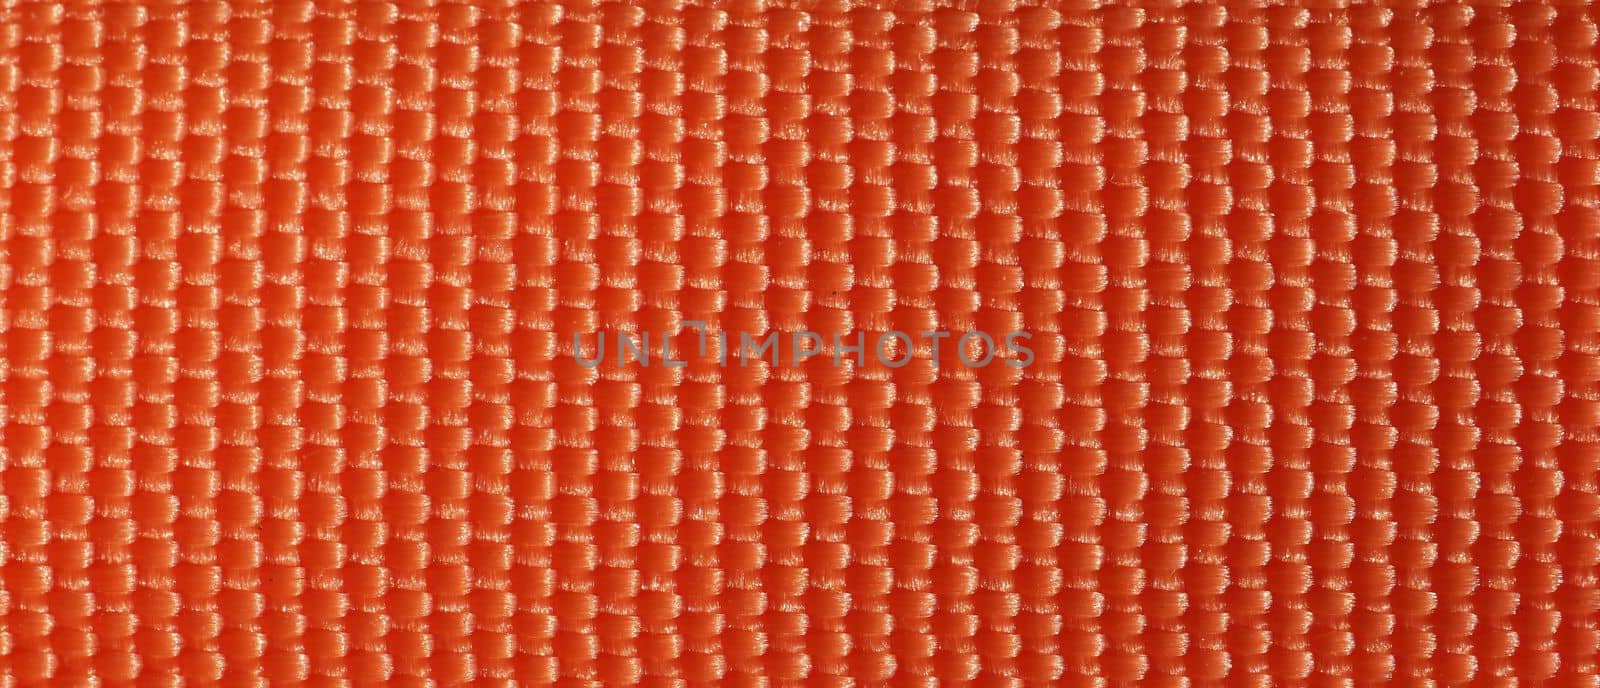 orange fabric texture background by claudiodivizia